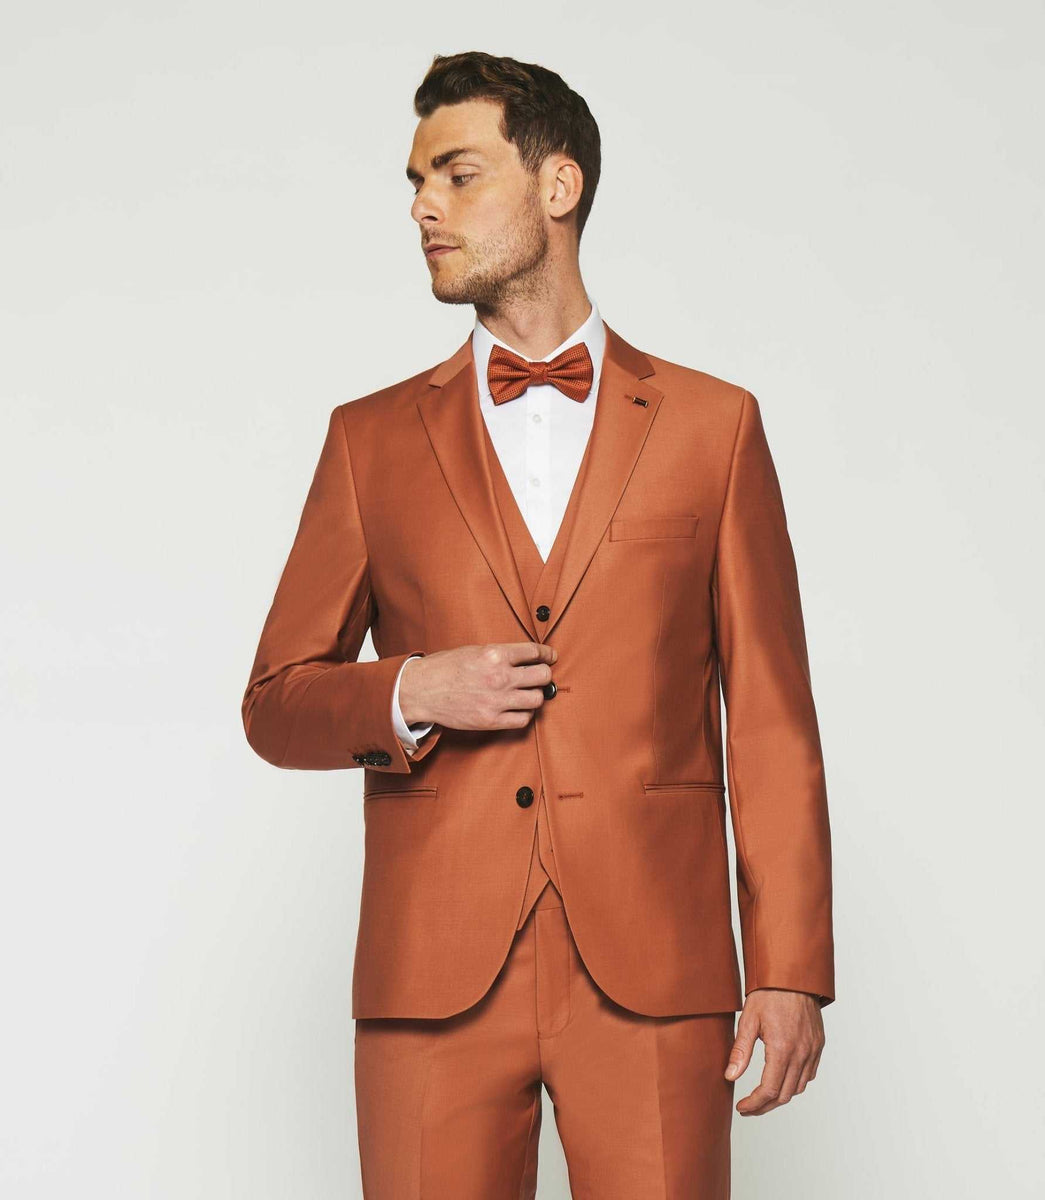 Burnt orange suit jacket